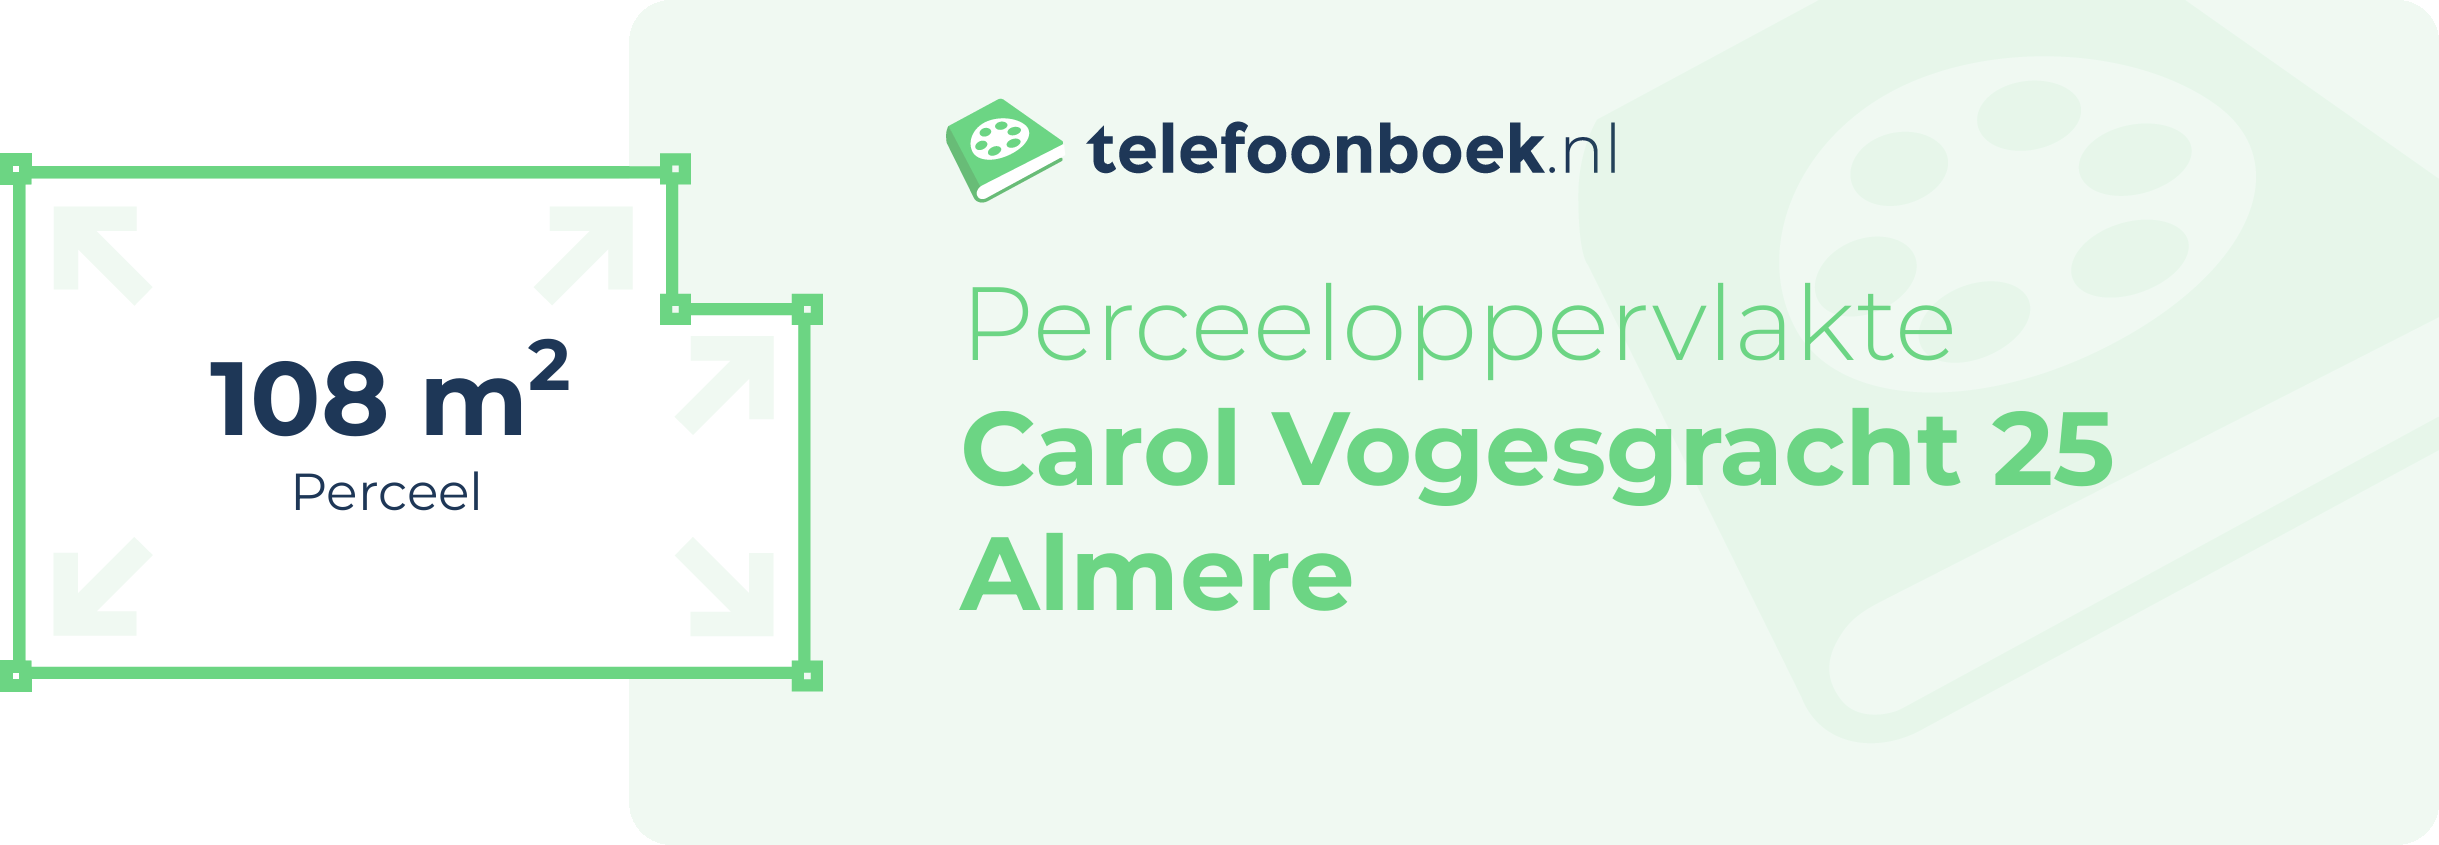 Perceeloppervlakte Carol Vogesgracht 25 Almere